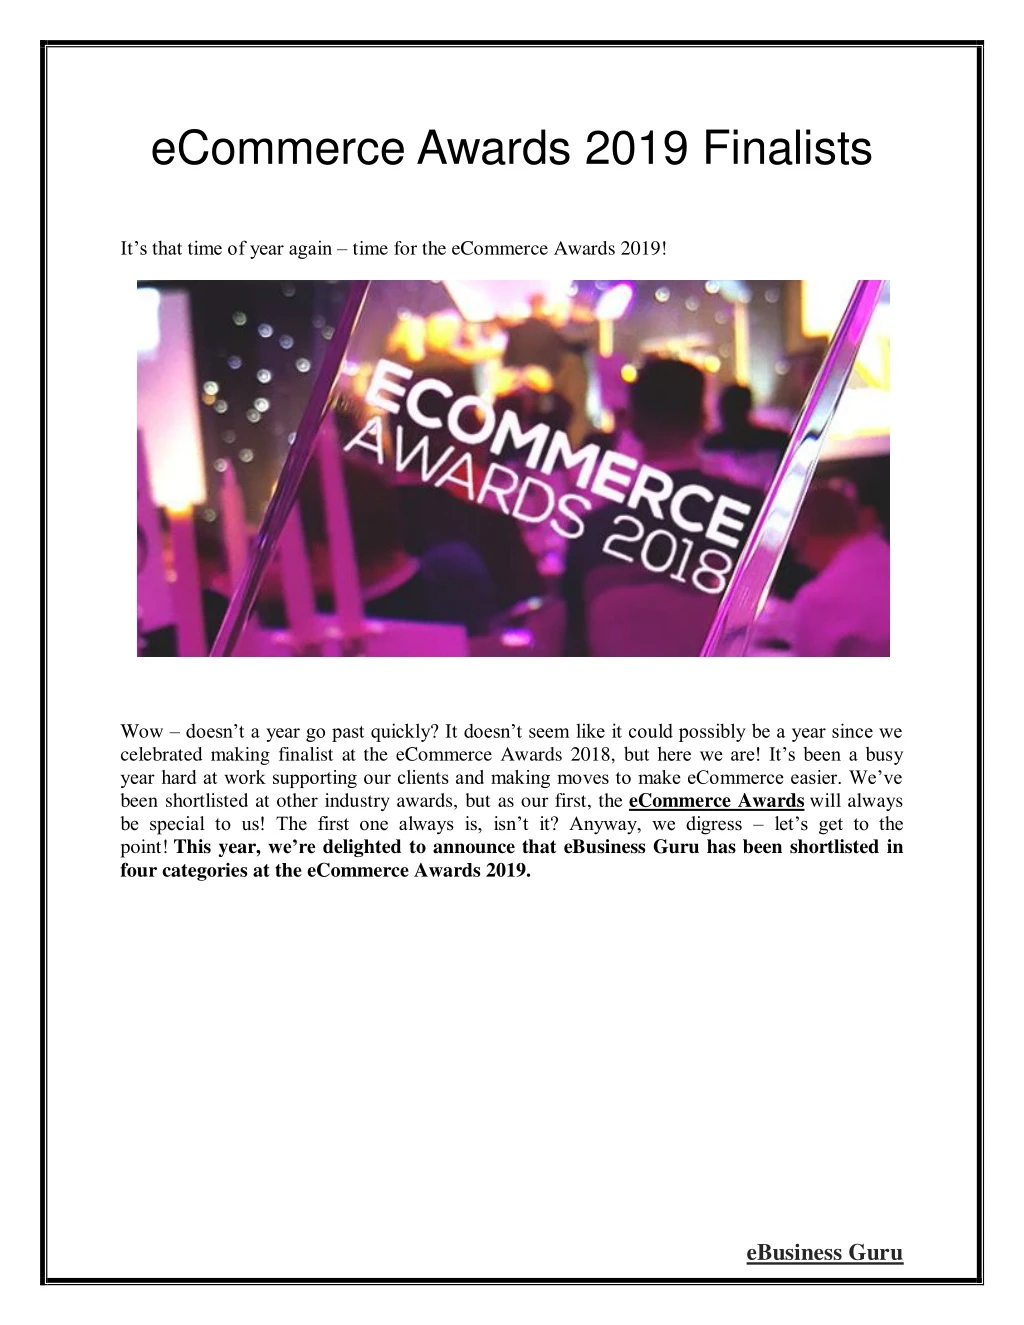 ecommerce awards 2019 finalists